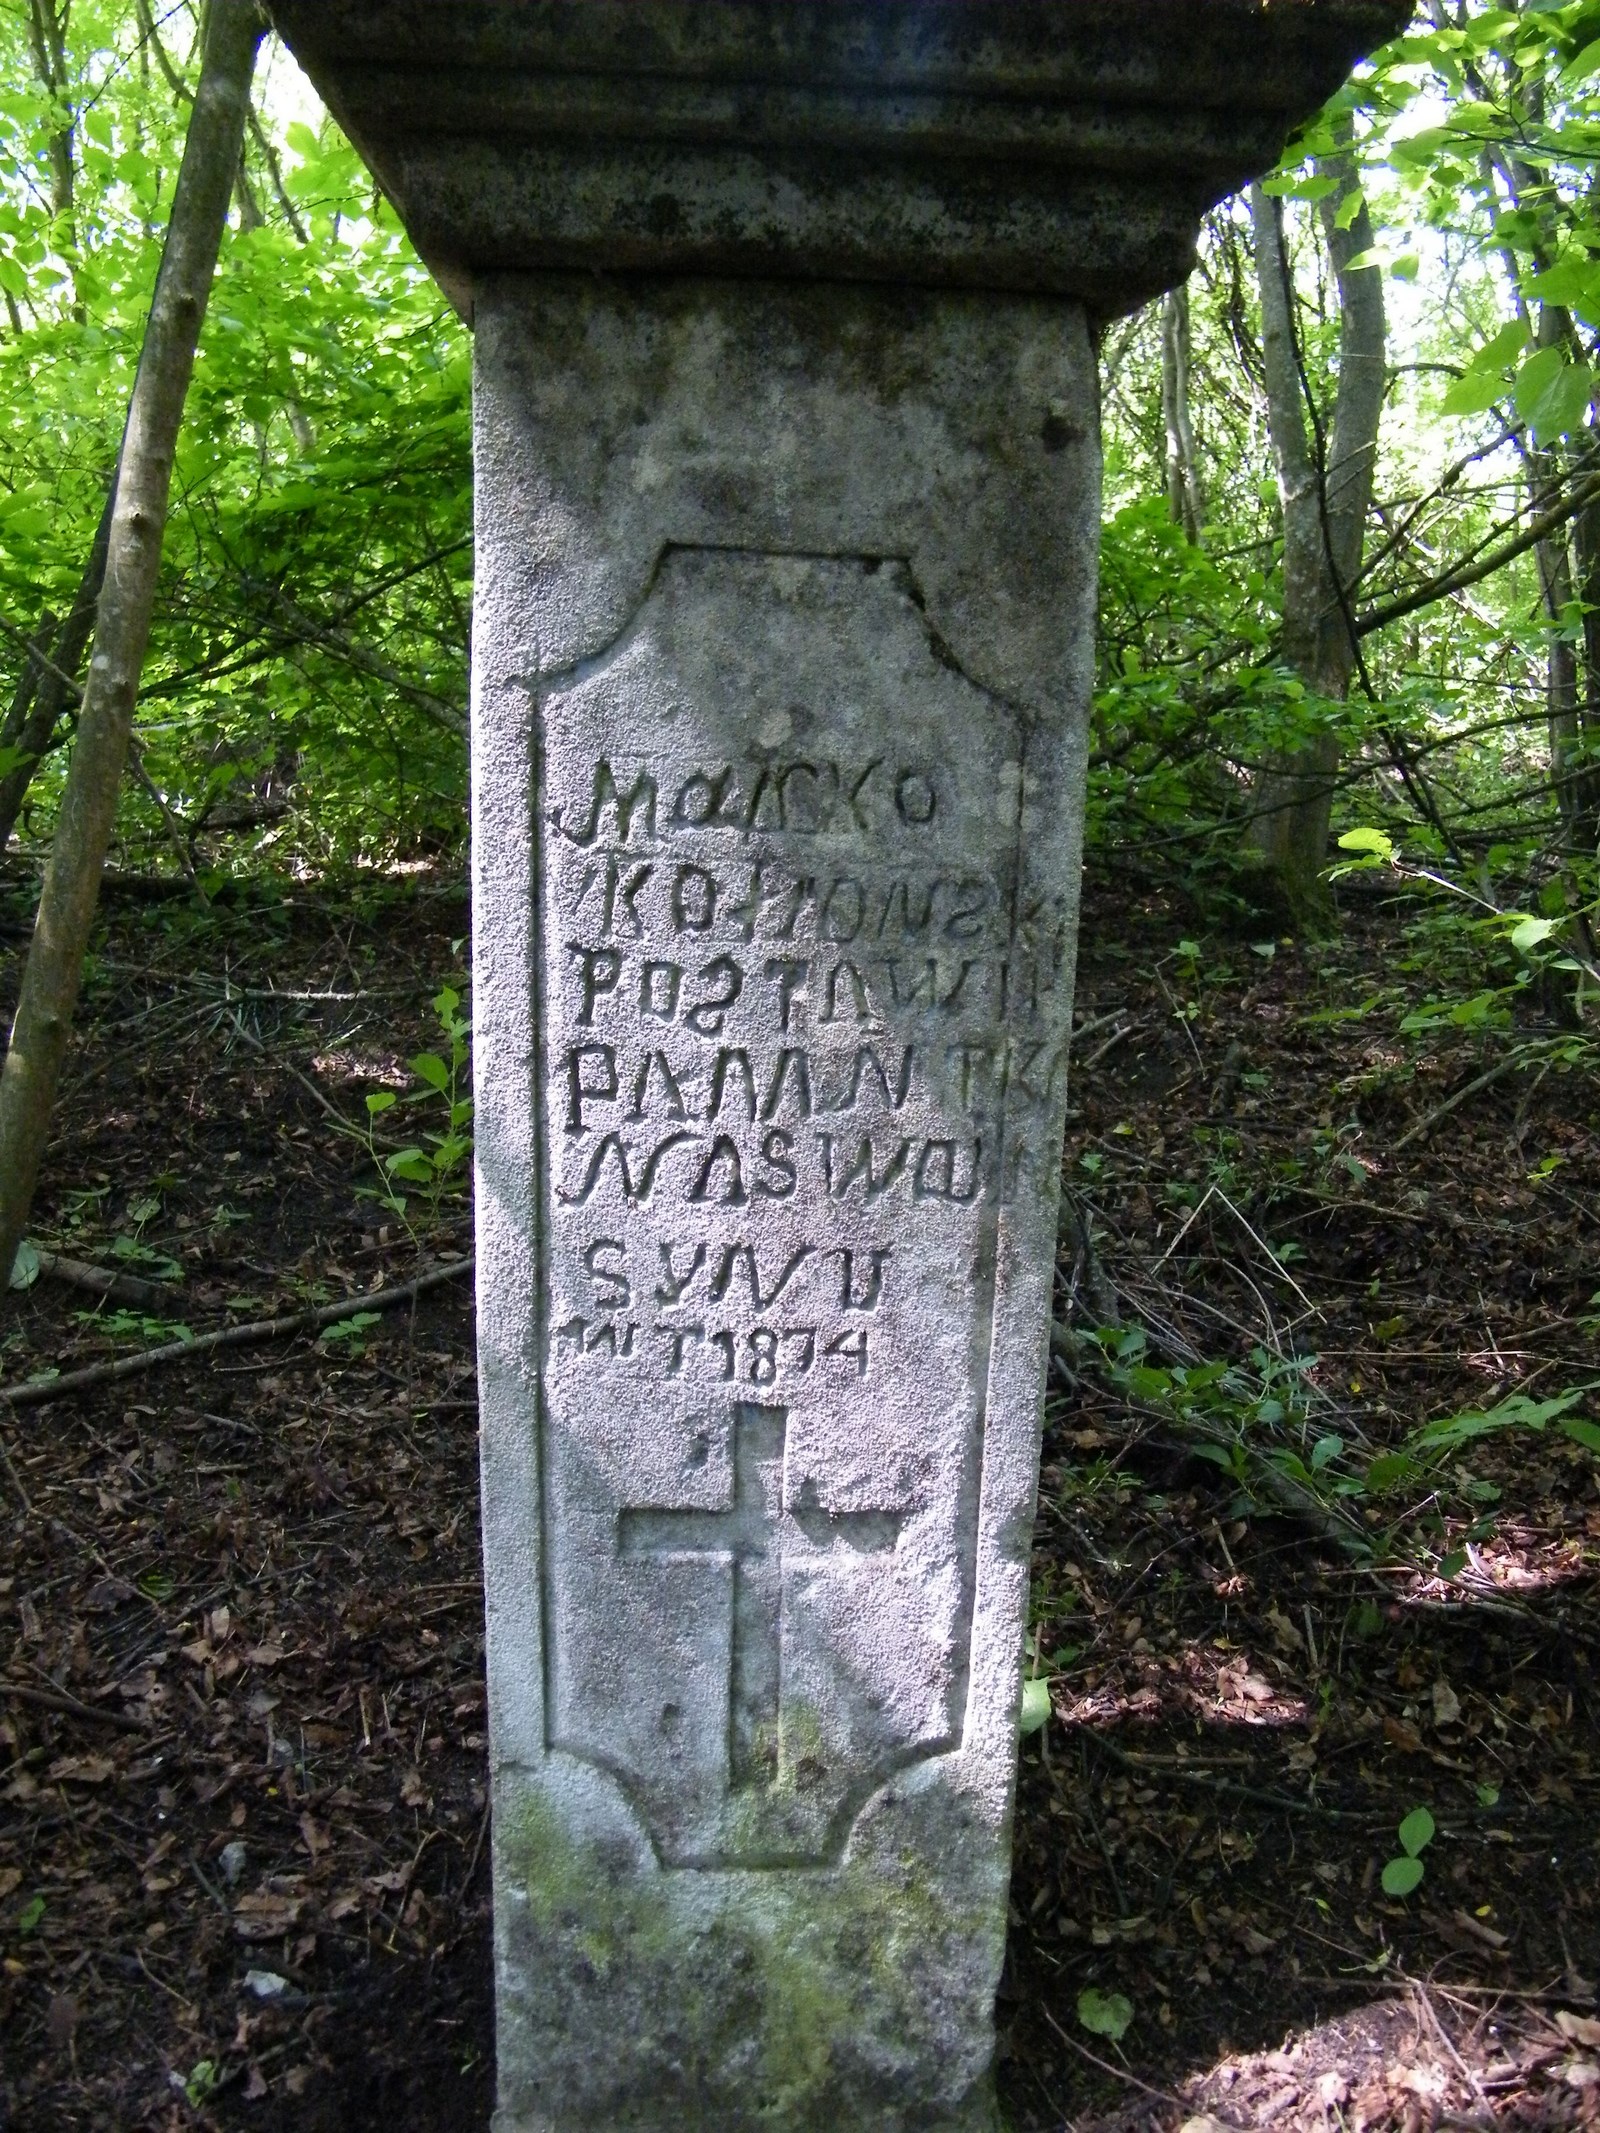 Inscription from a gravestone of Kolronzki N.N. Cemetery in Kokutkovce